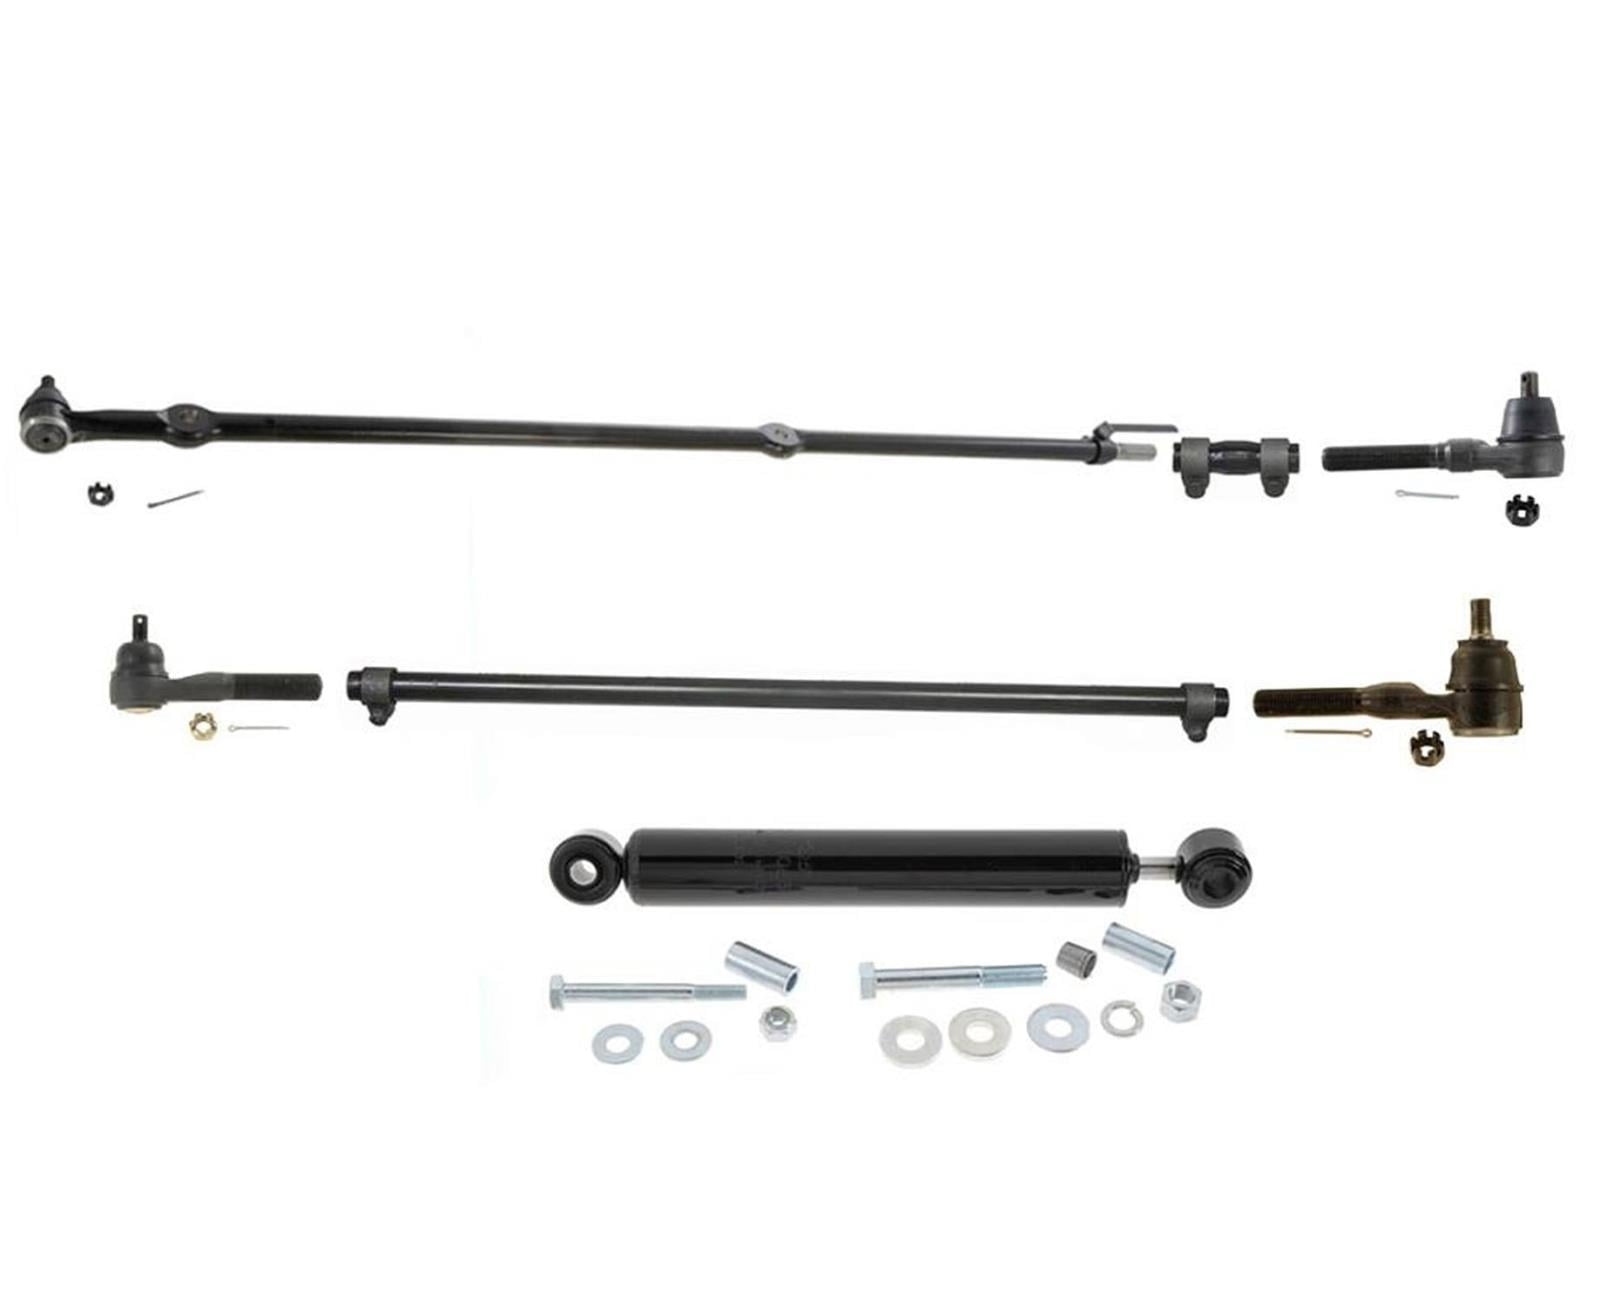 100% Brand New Drag Link Tie Rods Track Bar 7Pc Kit for Jeep Wrangler 91-95  